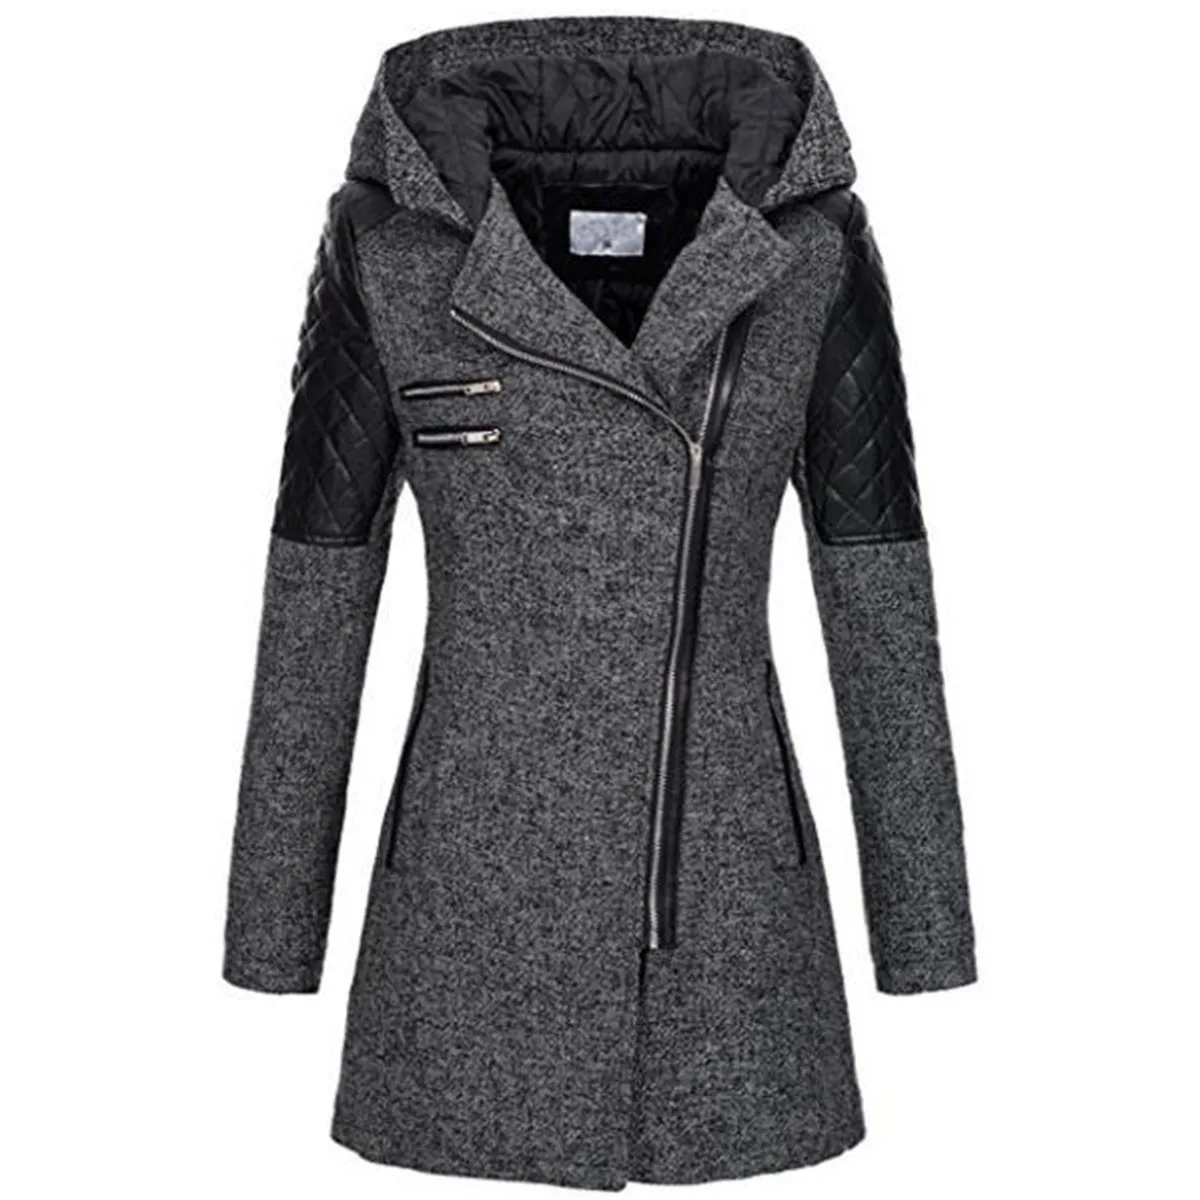 

Kinikiss 2018 women coat zipper autumn black hoodies patchwork long sleeve warm contrast color jacket winter coats & jackets